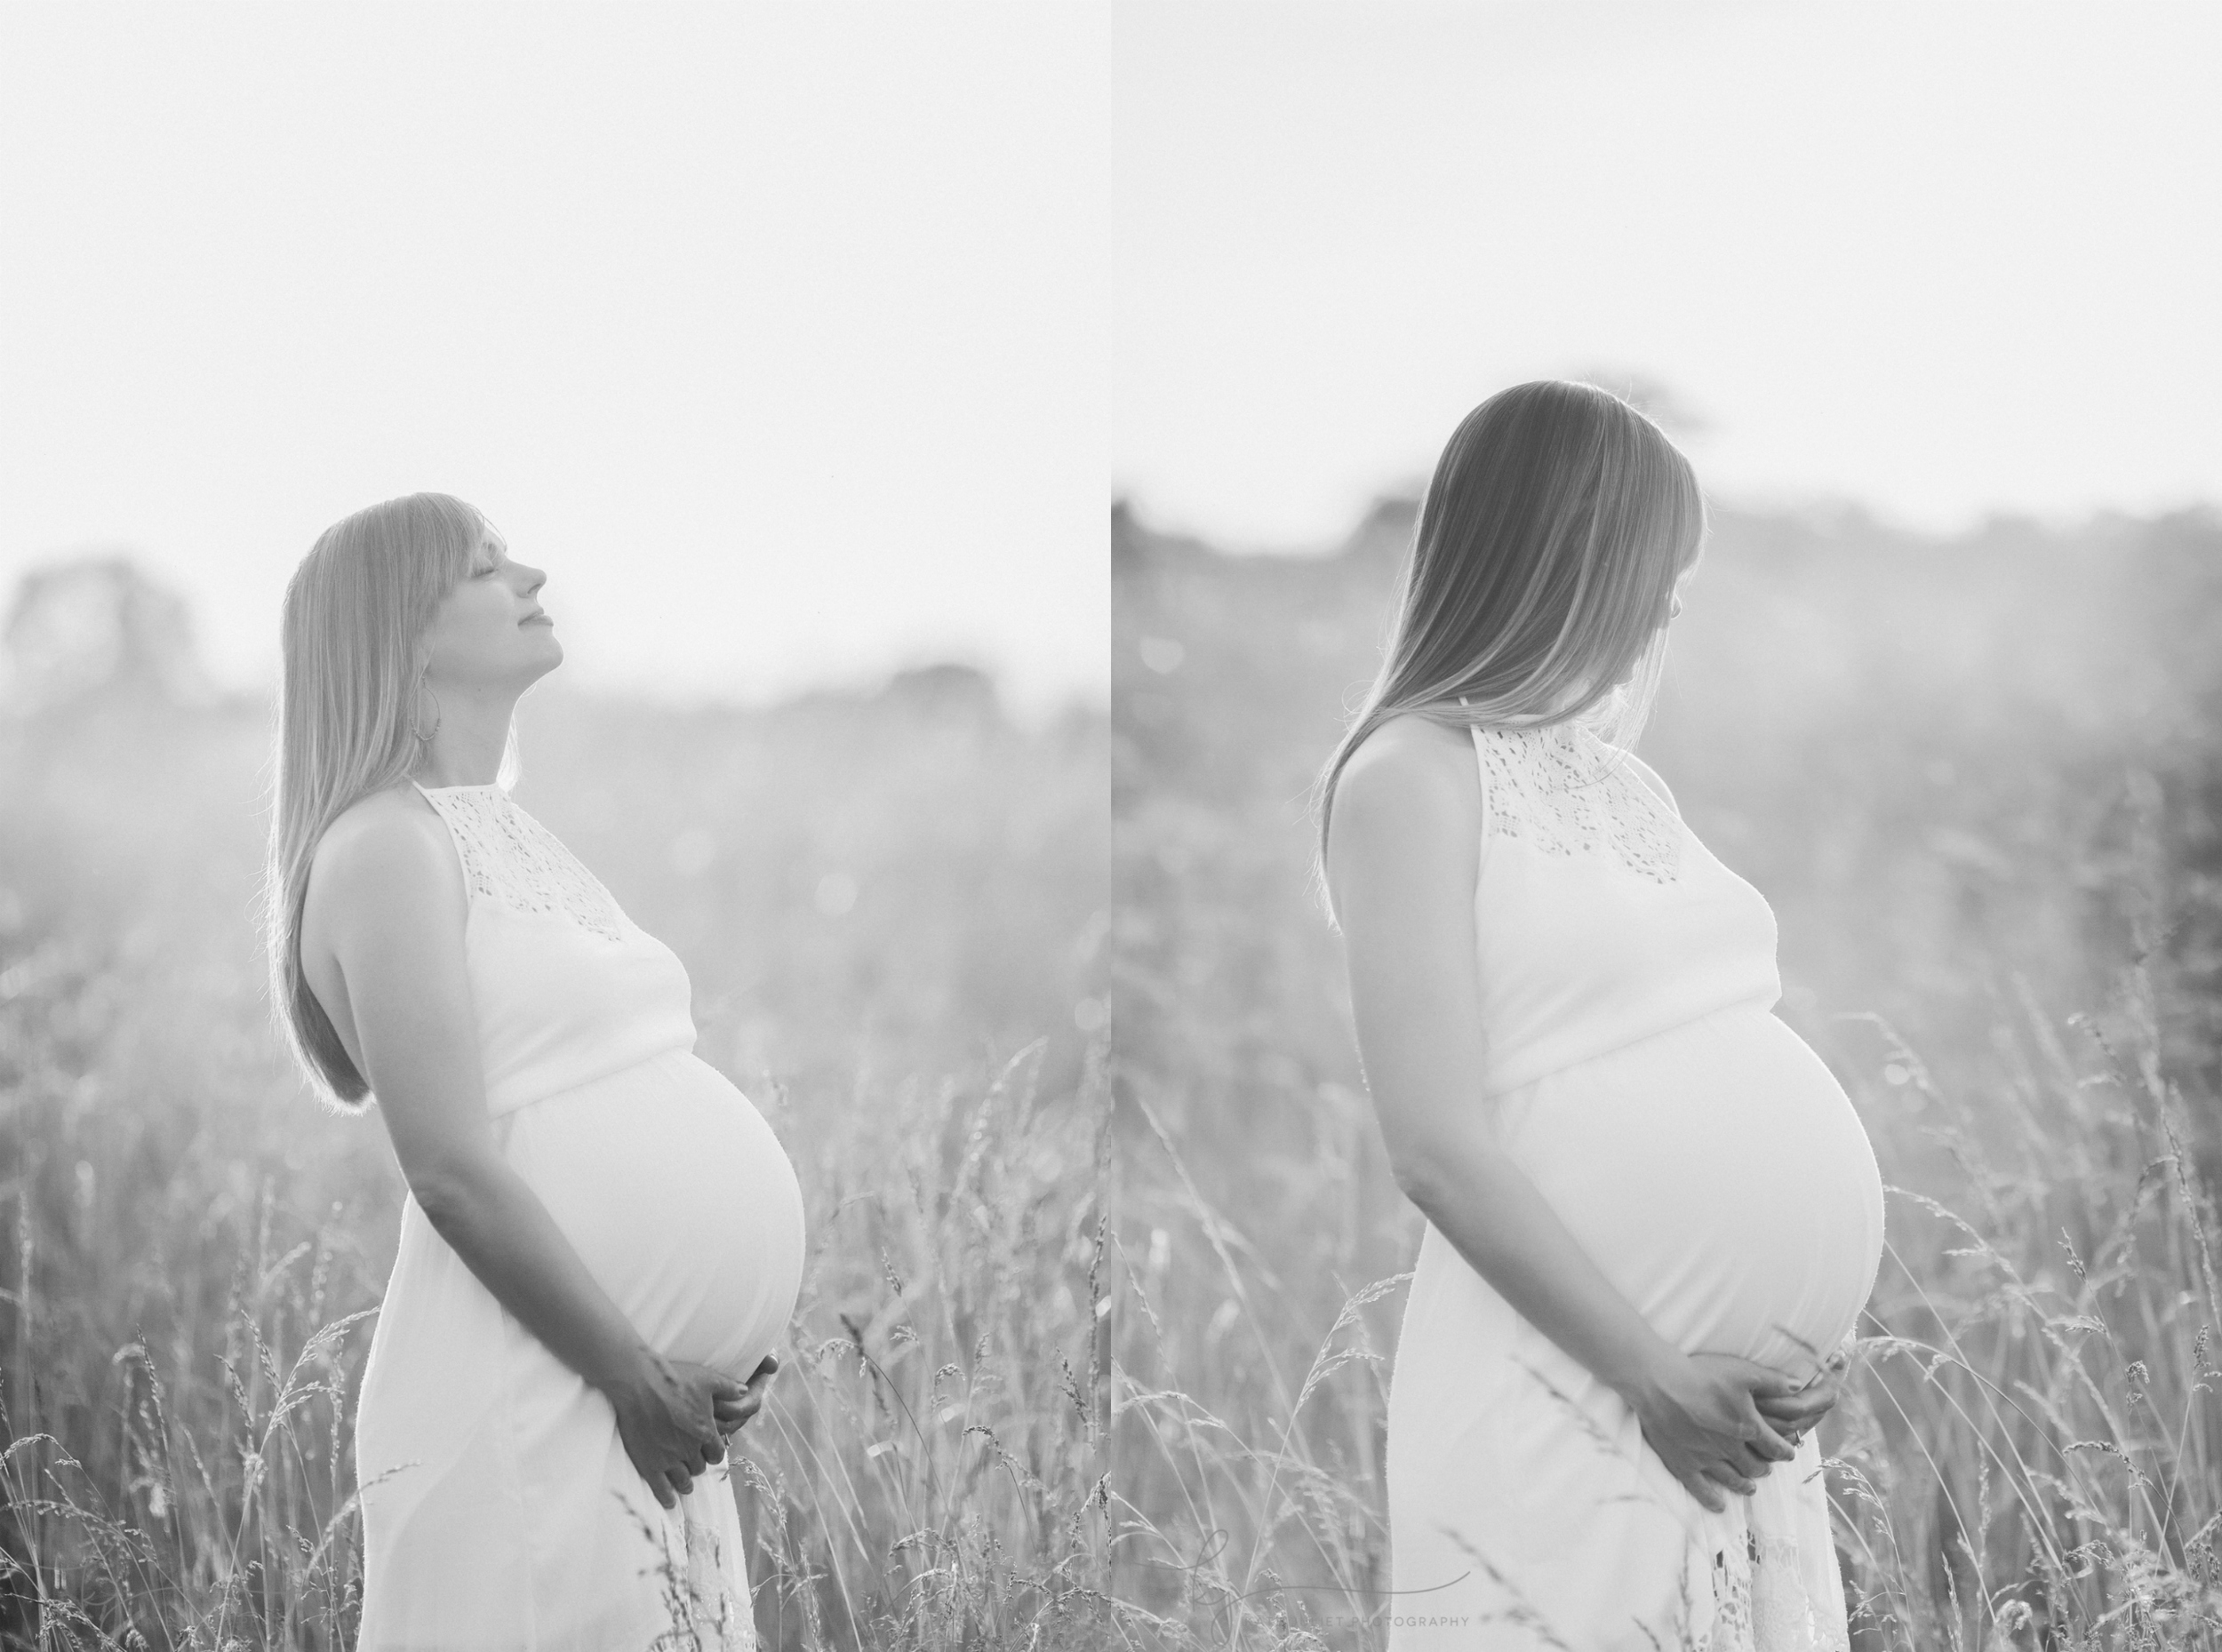 Washington DC Maternity and Newborn Photographer | Kate Juliet Photography